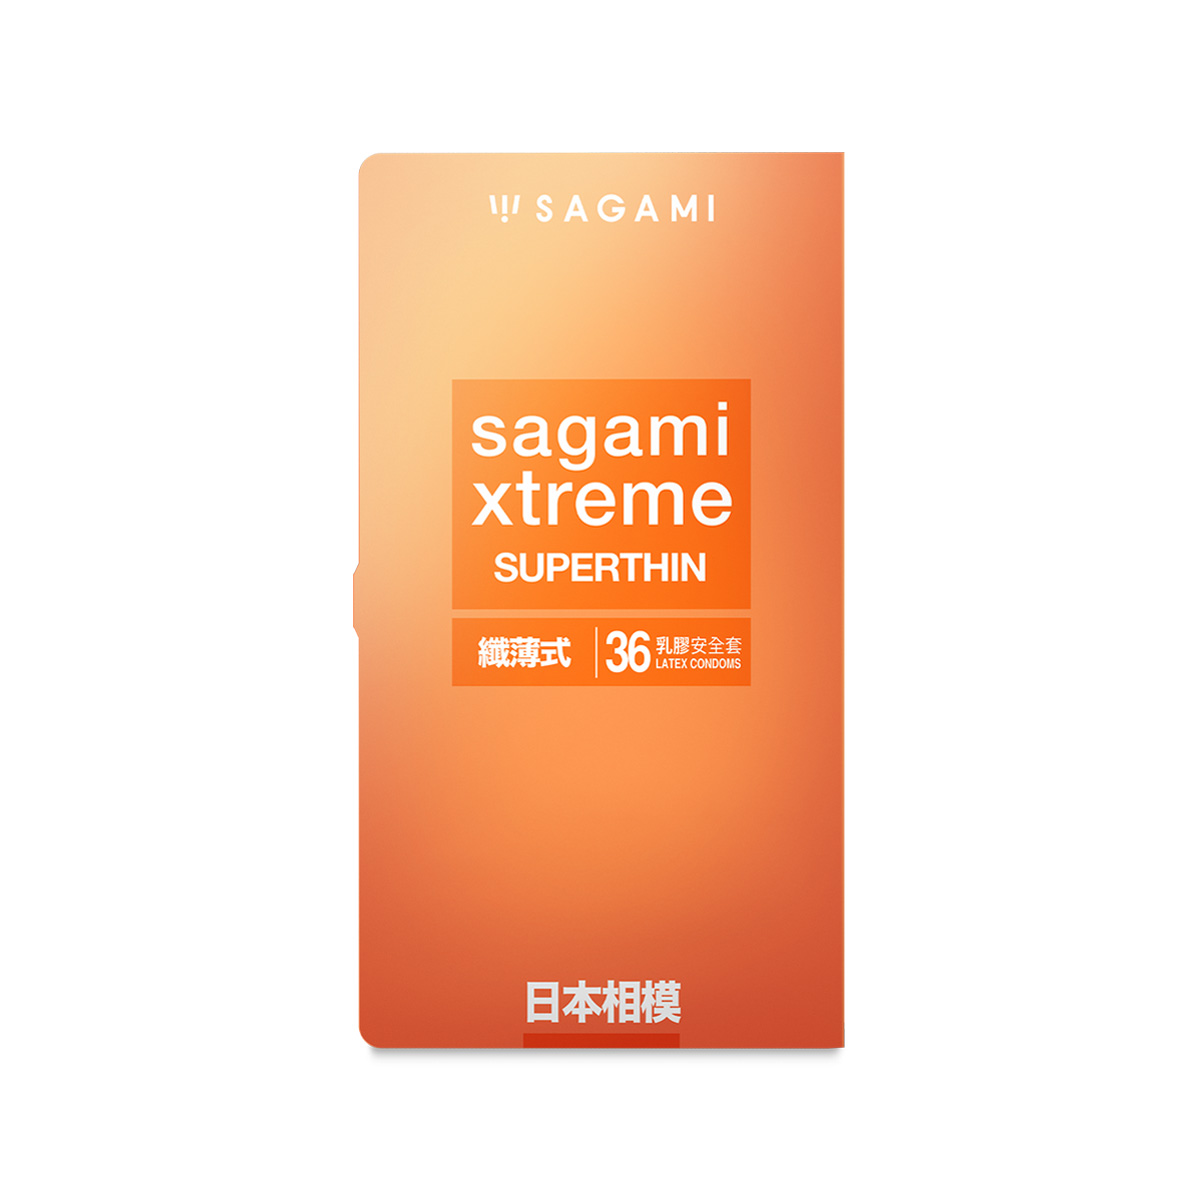 Sagami Xtreme Superthin 36s